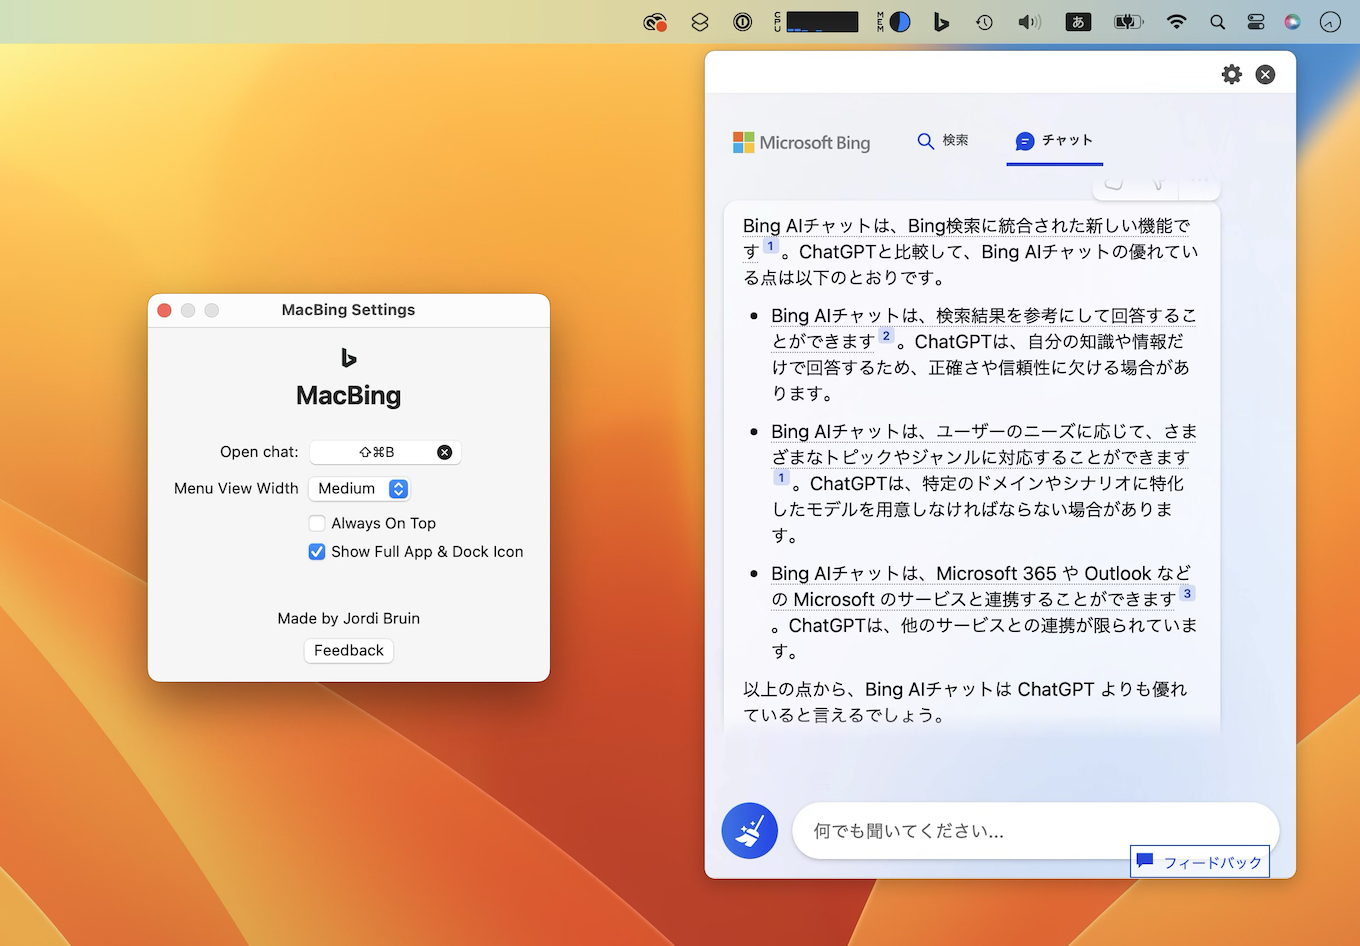 MacBig - Access Bing AI from your Mac Menubar